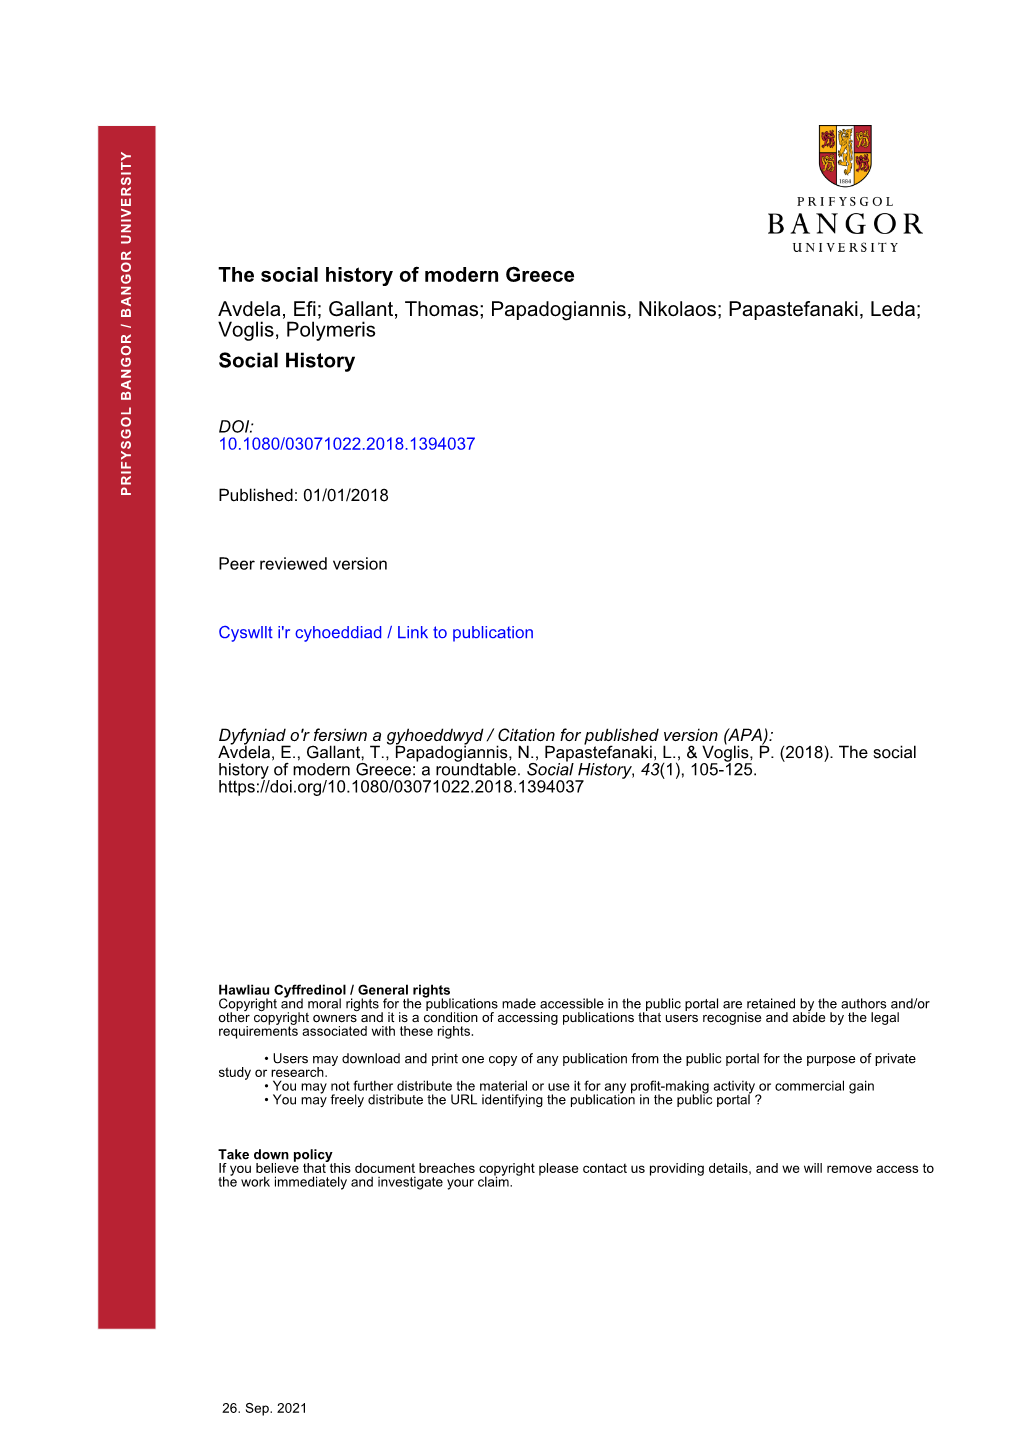 The Social History of Modern Greece Avdela, Efi; Gallant, Thomas